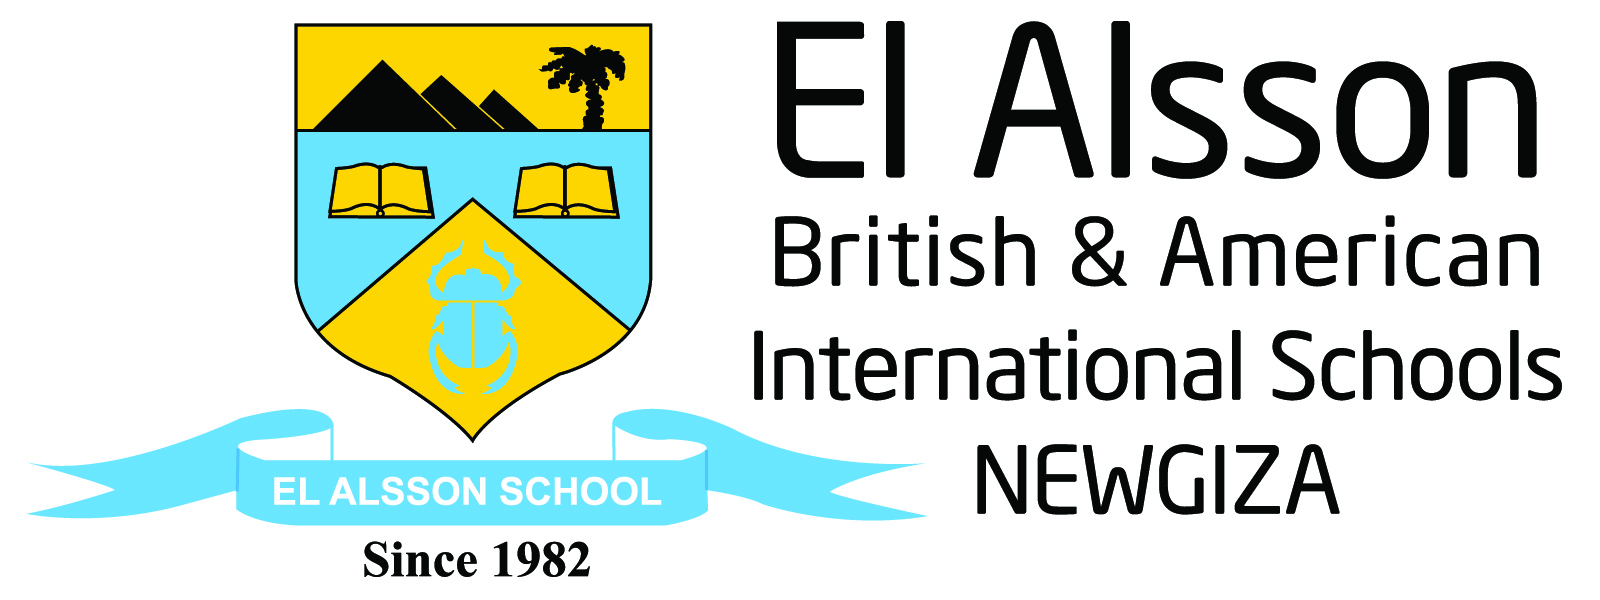 El Alsson British and American International School NewGiza